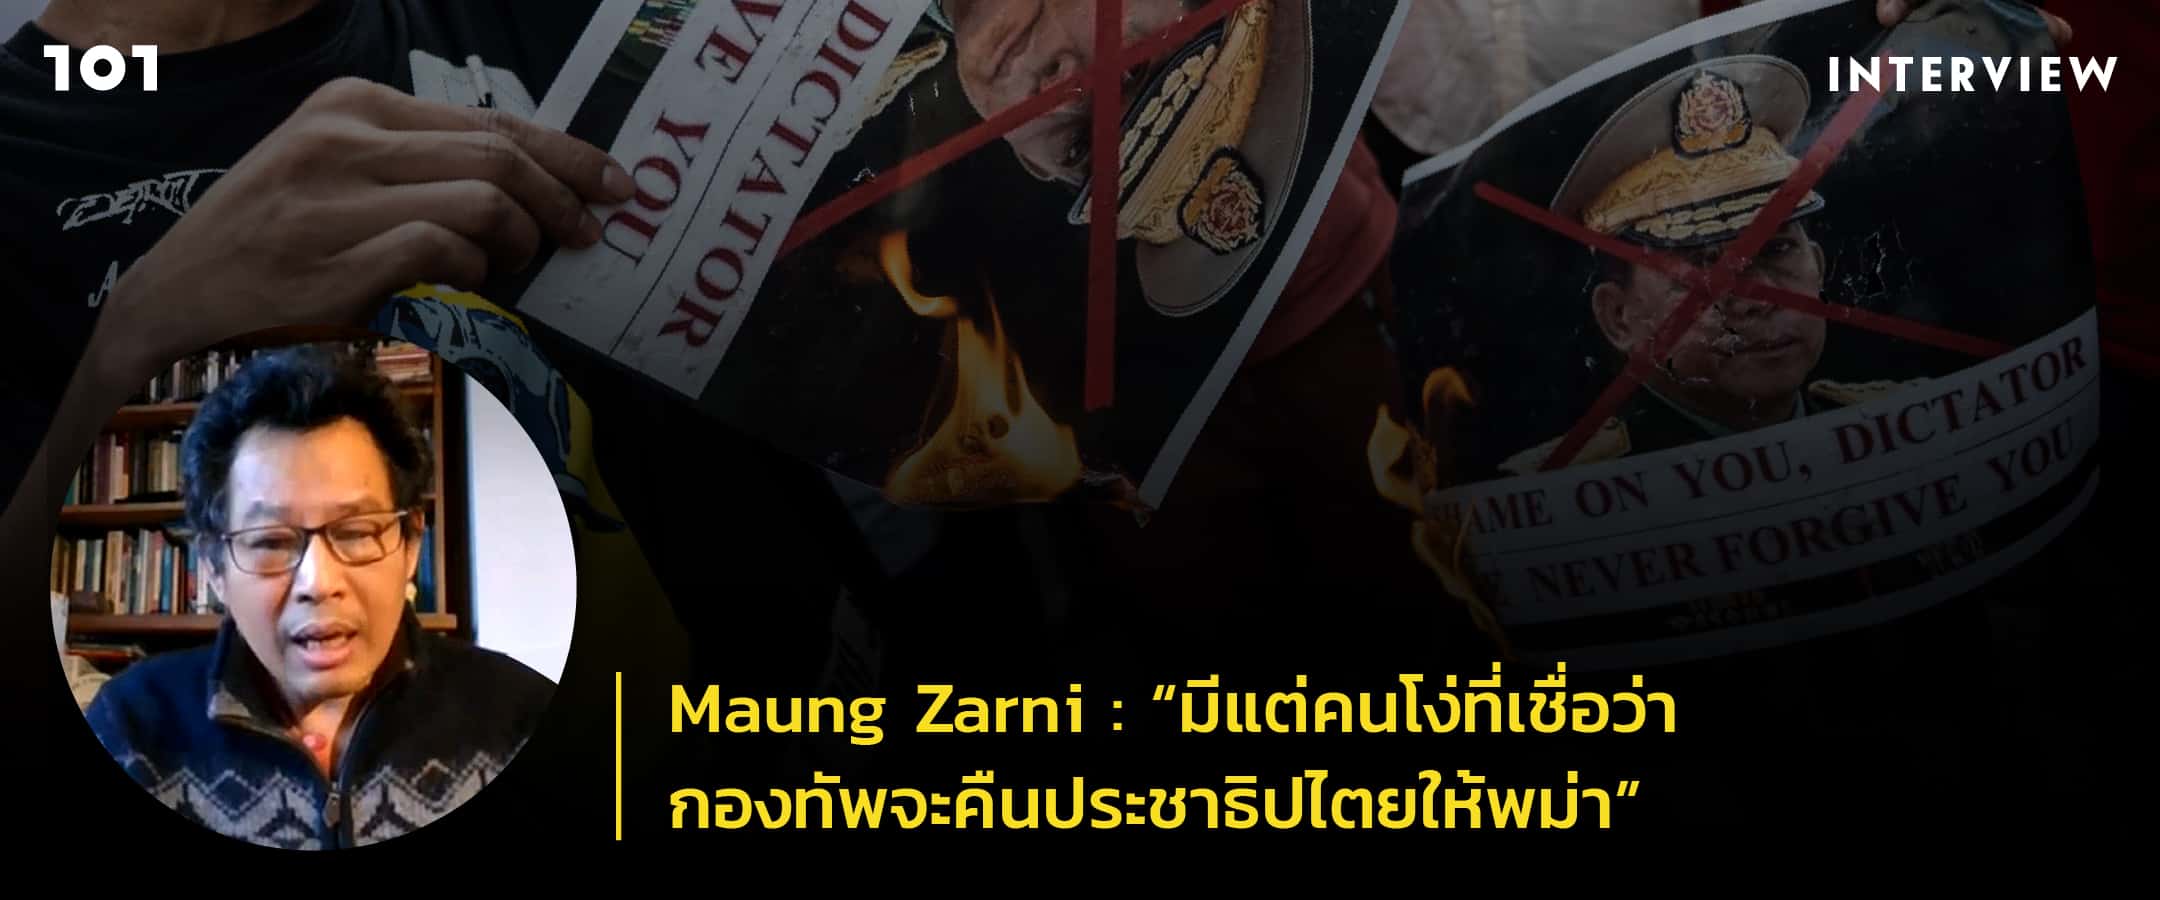 Maung Zarni : “มีแต่คนโง่ที่เชื่อว่ากองทัพจะคืนประชาธิปไตยให้พม่า”